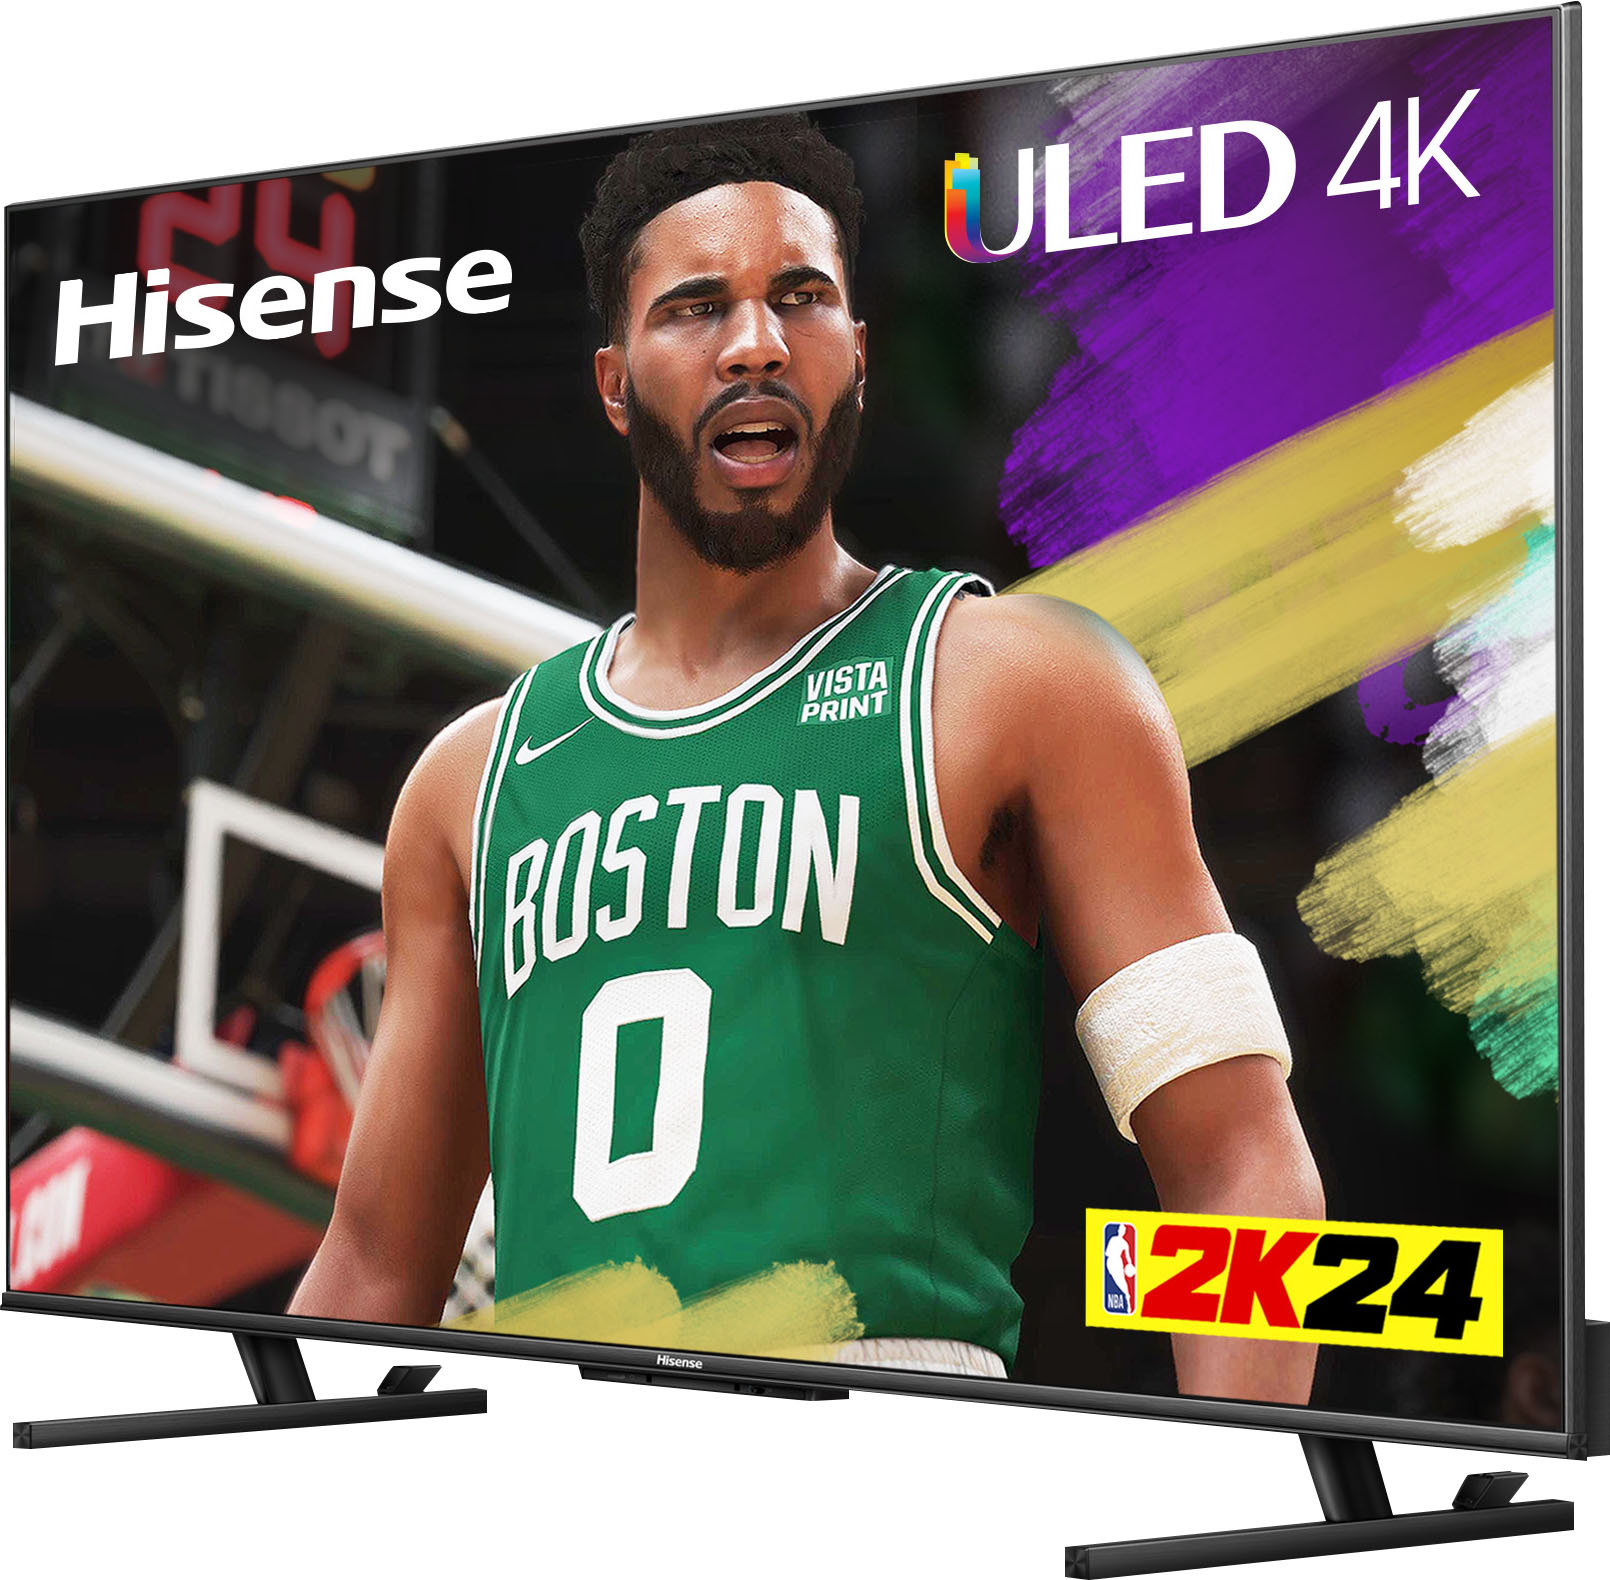 Hisense U7K: WHOA! Best Mini LED TV For The Price? 😲 1-Week Review